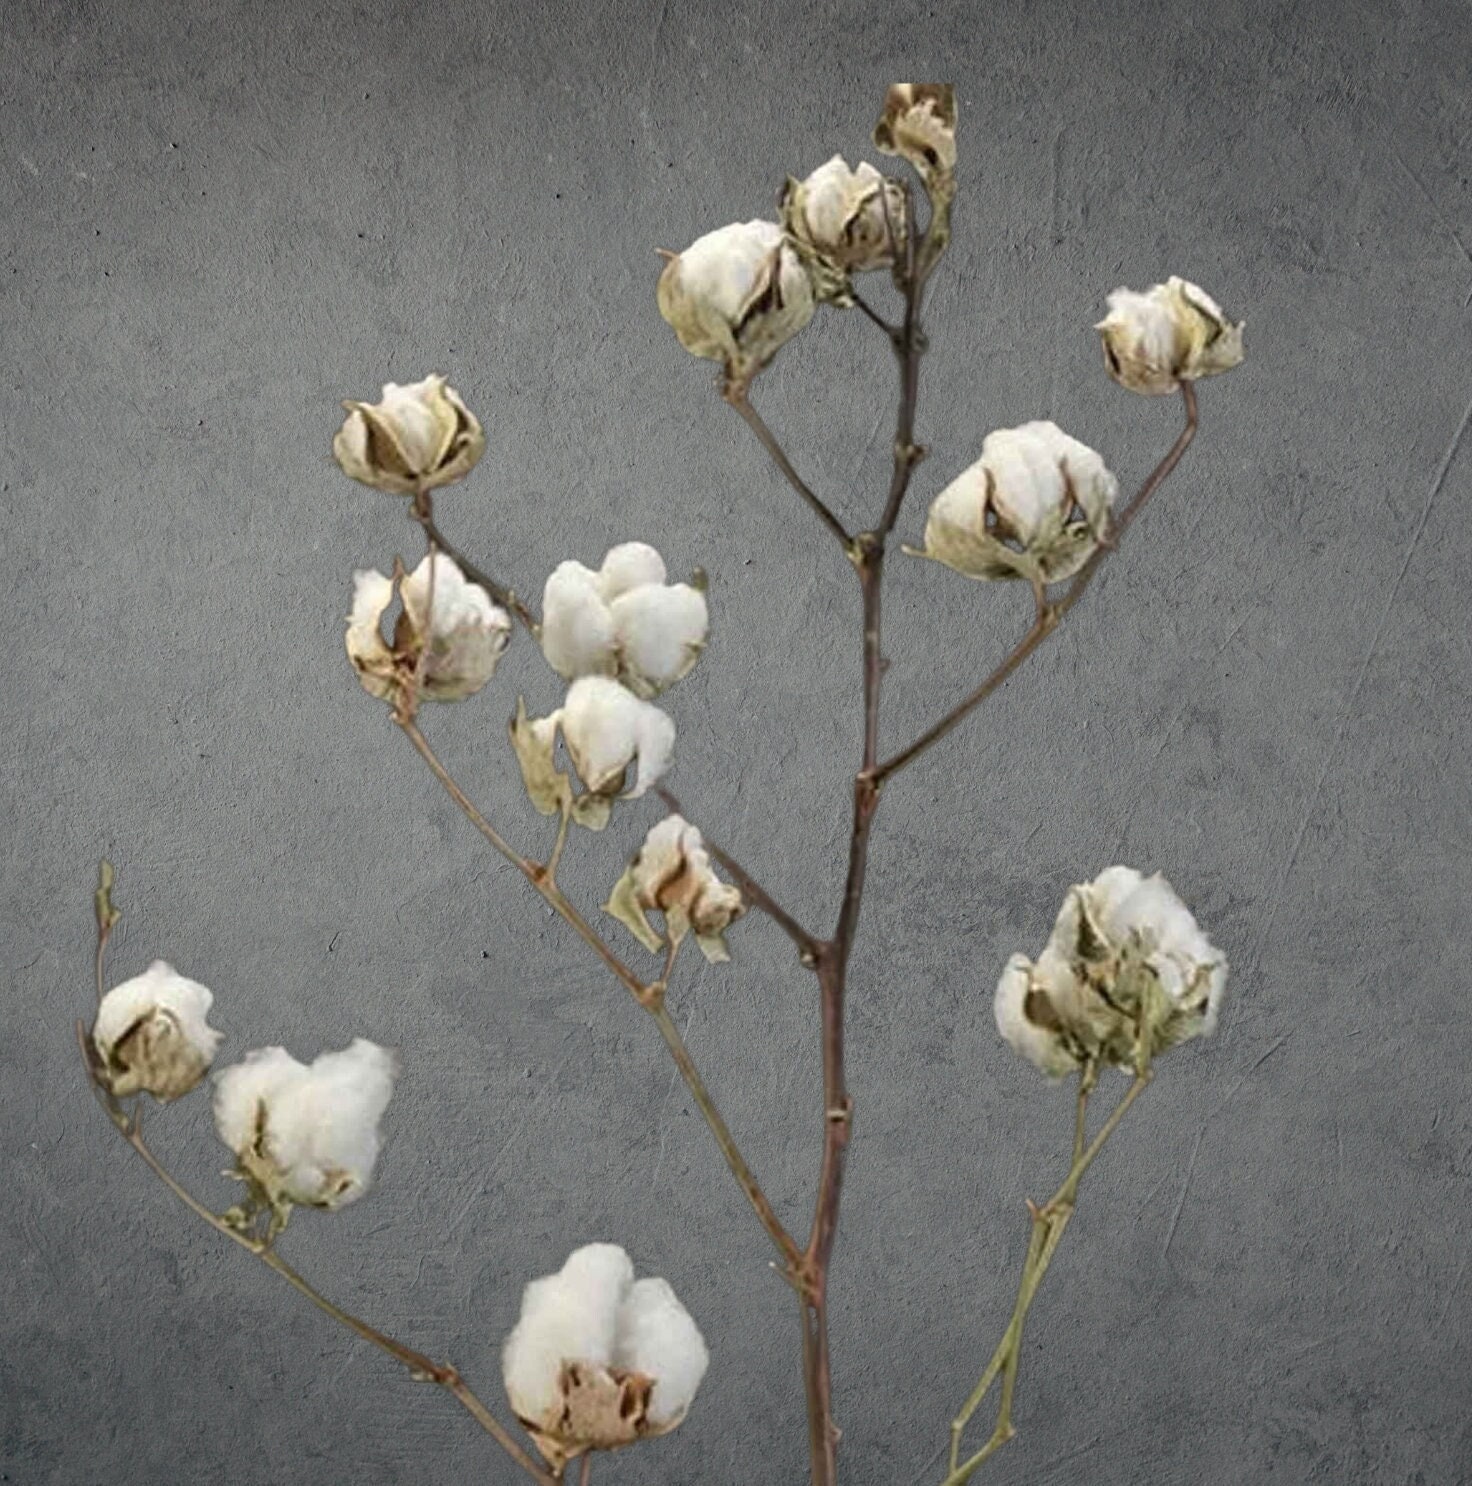 4Balls per Stem Cotton Flower Dried Cotton Eucalyptus Naturally